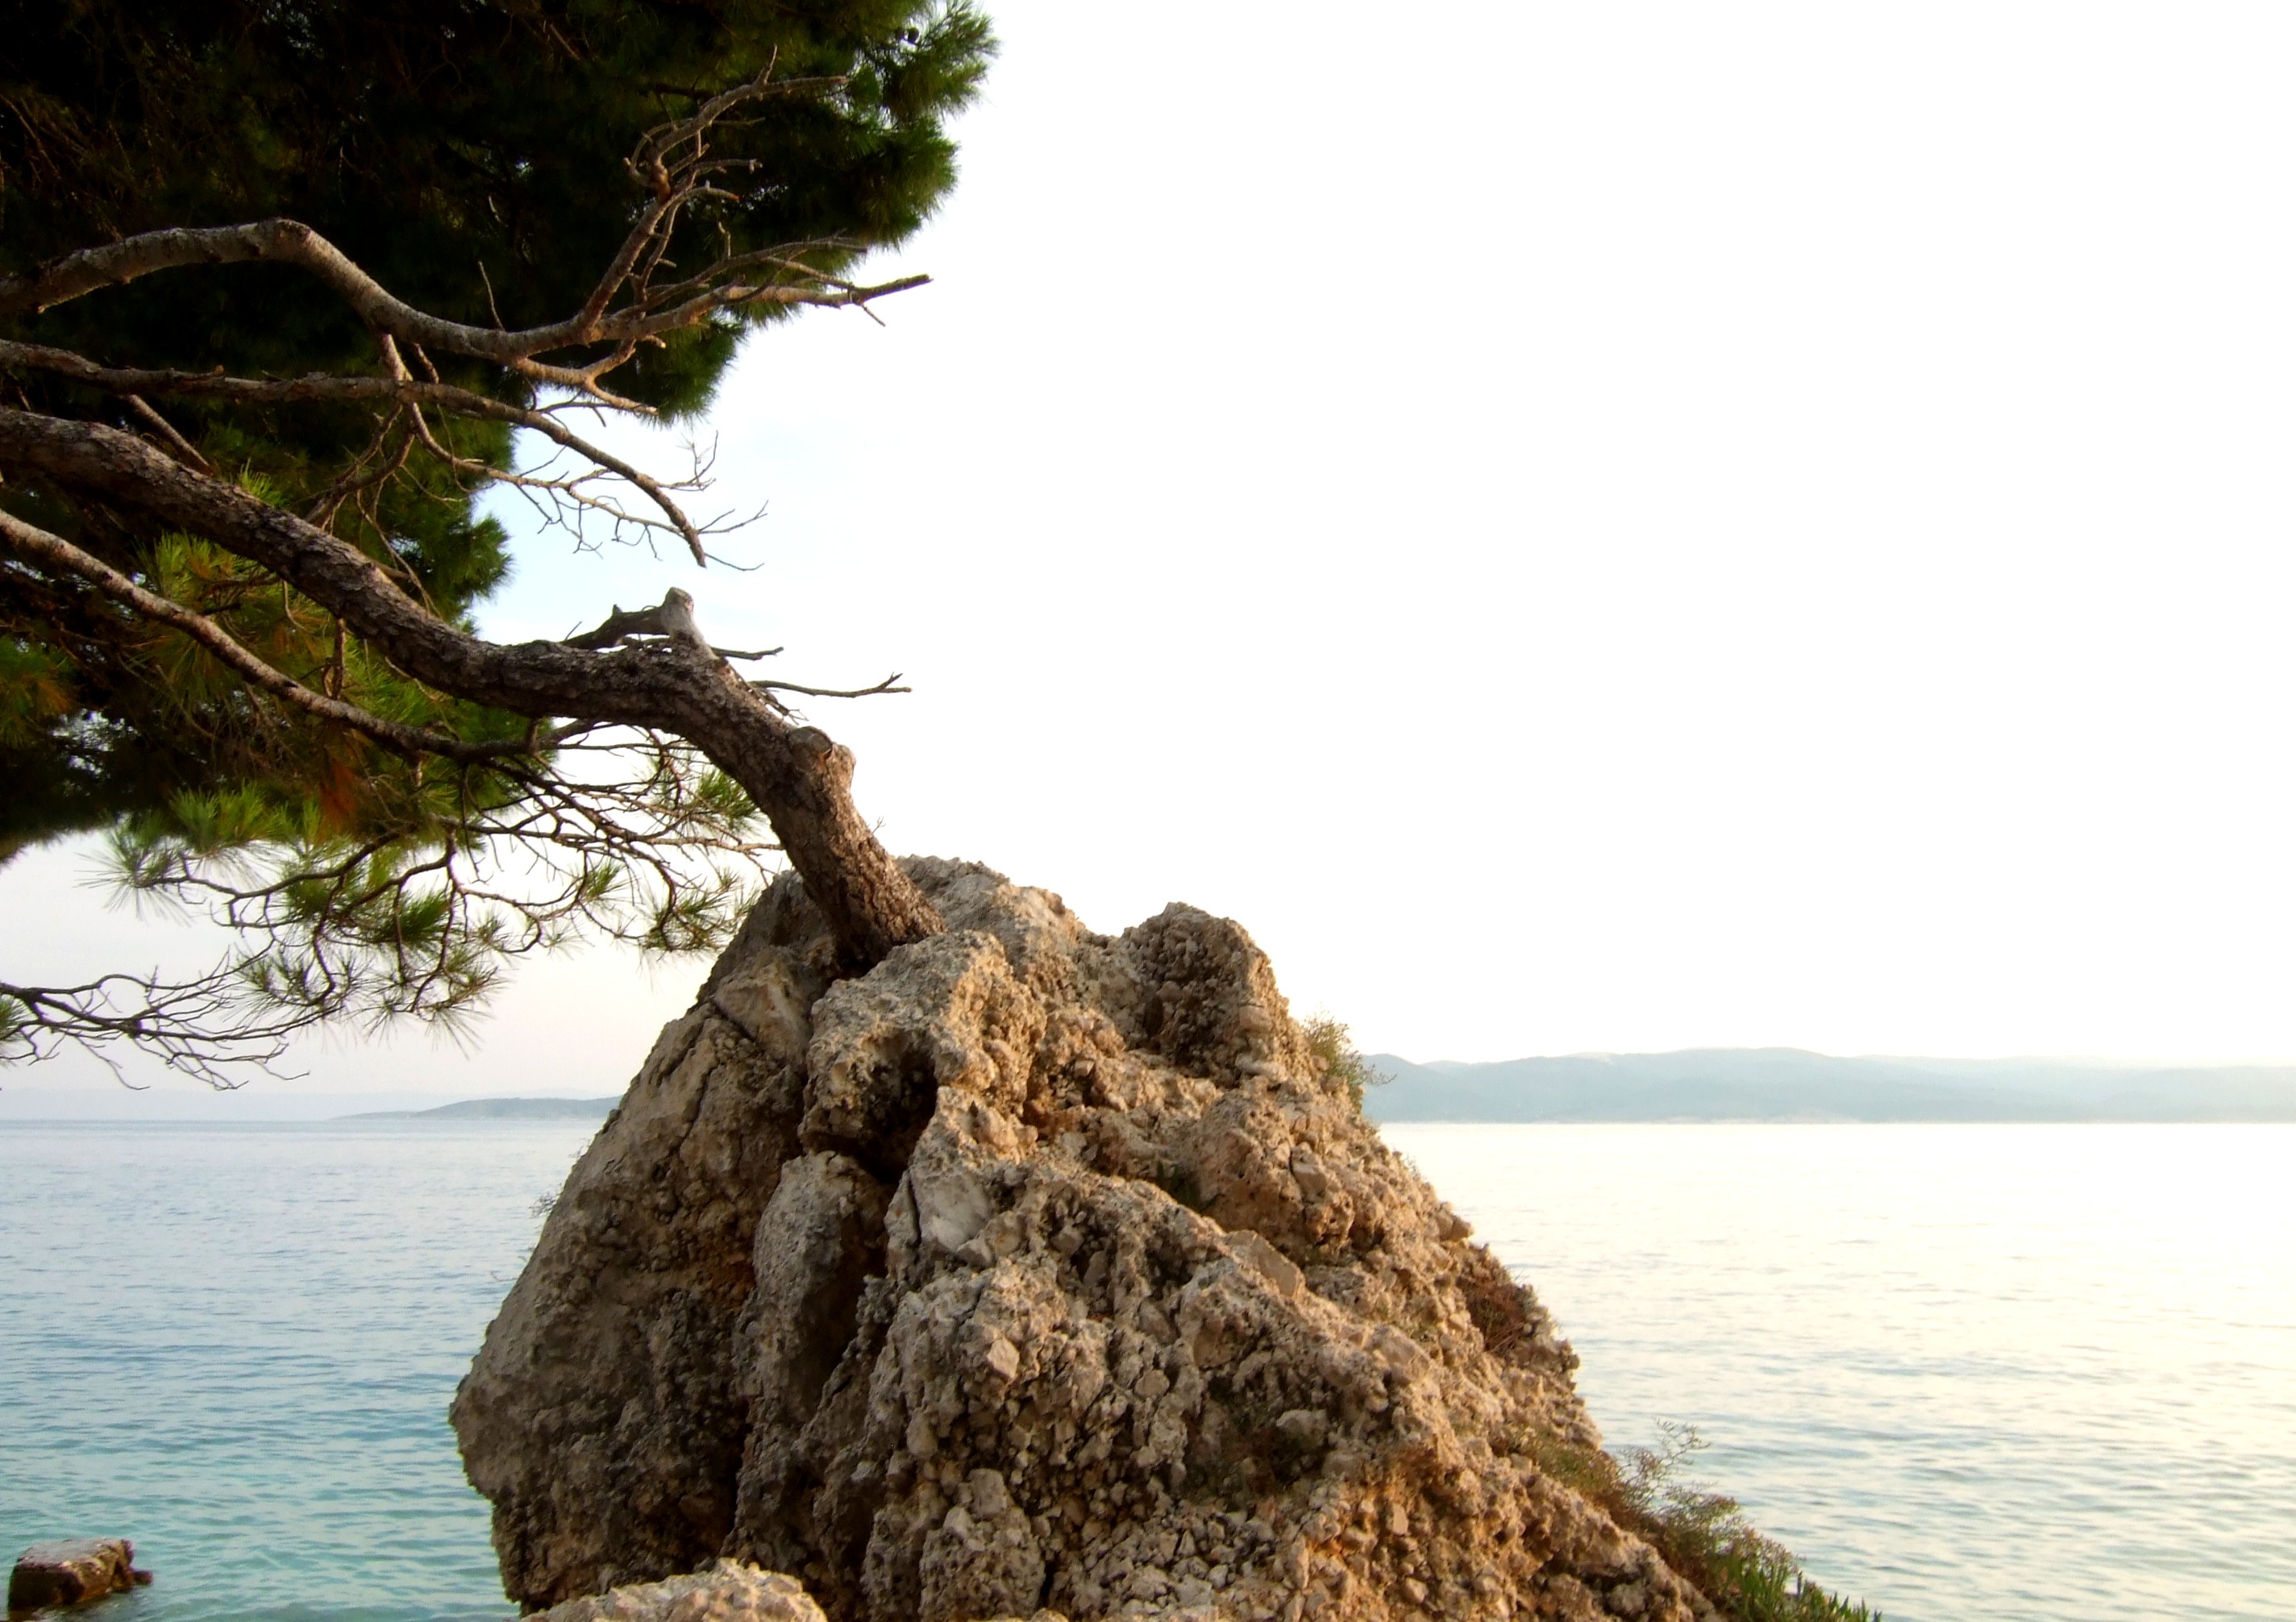 File:Tree on the rock.jpeg - Wikimedia Commons